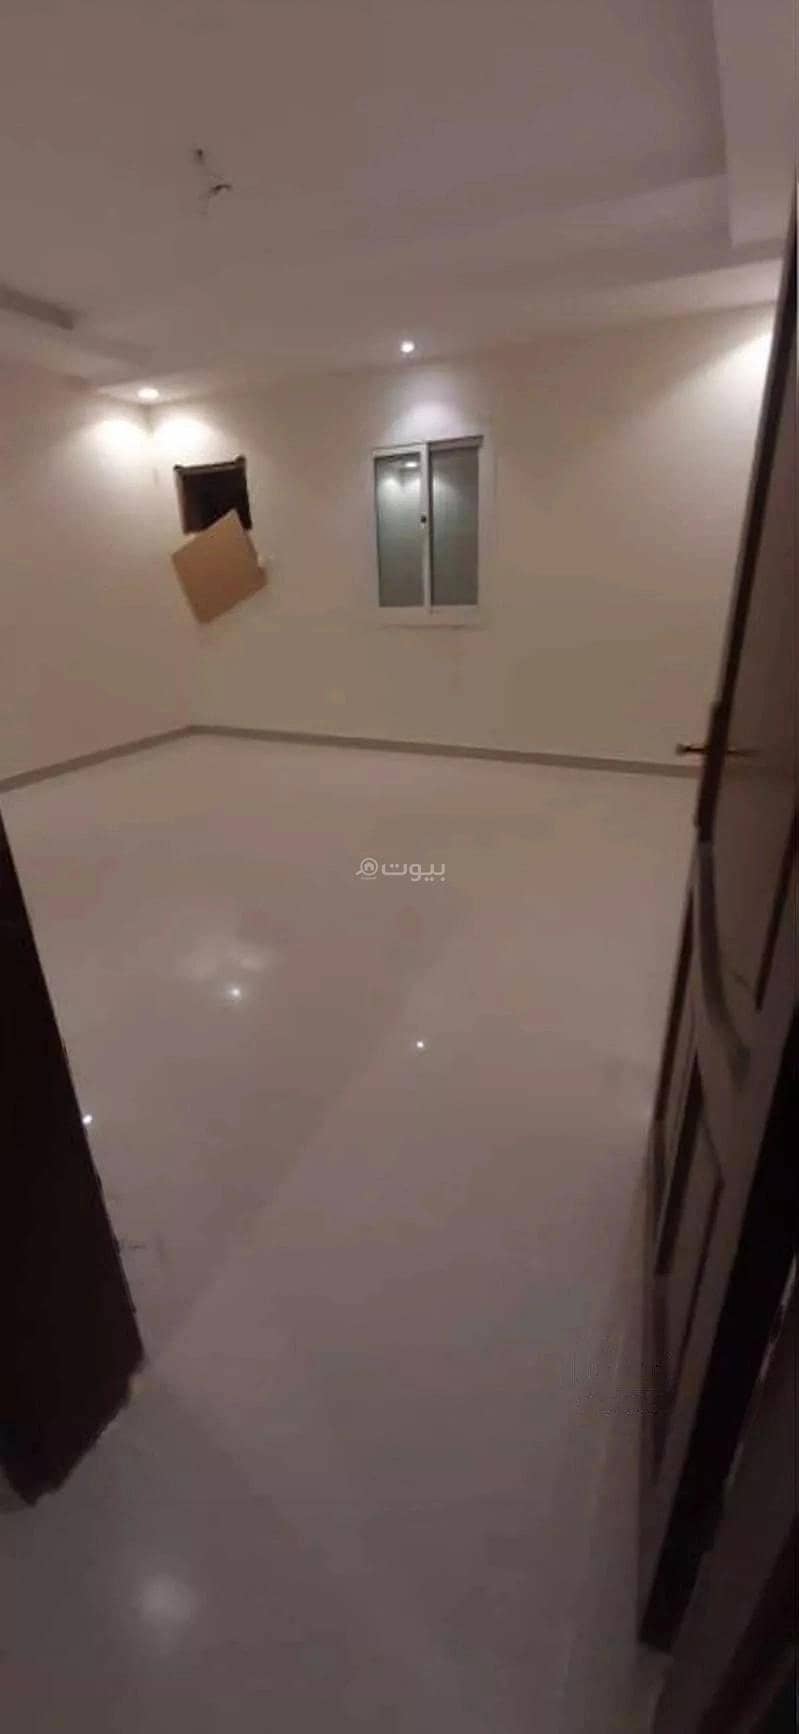 5-Room Apartment For Rent in Alfalah, Jeddah